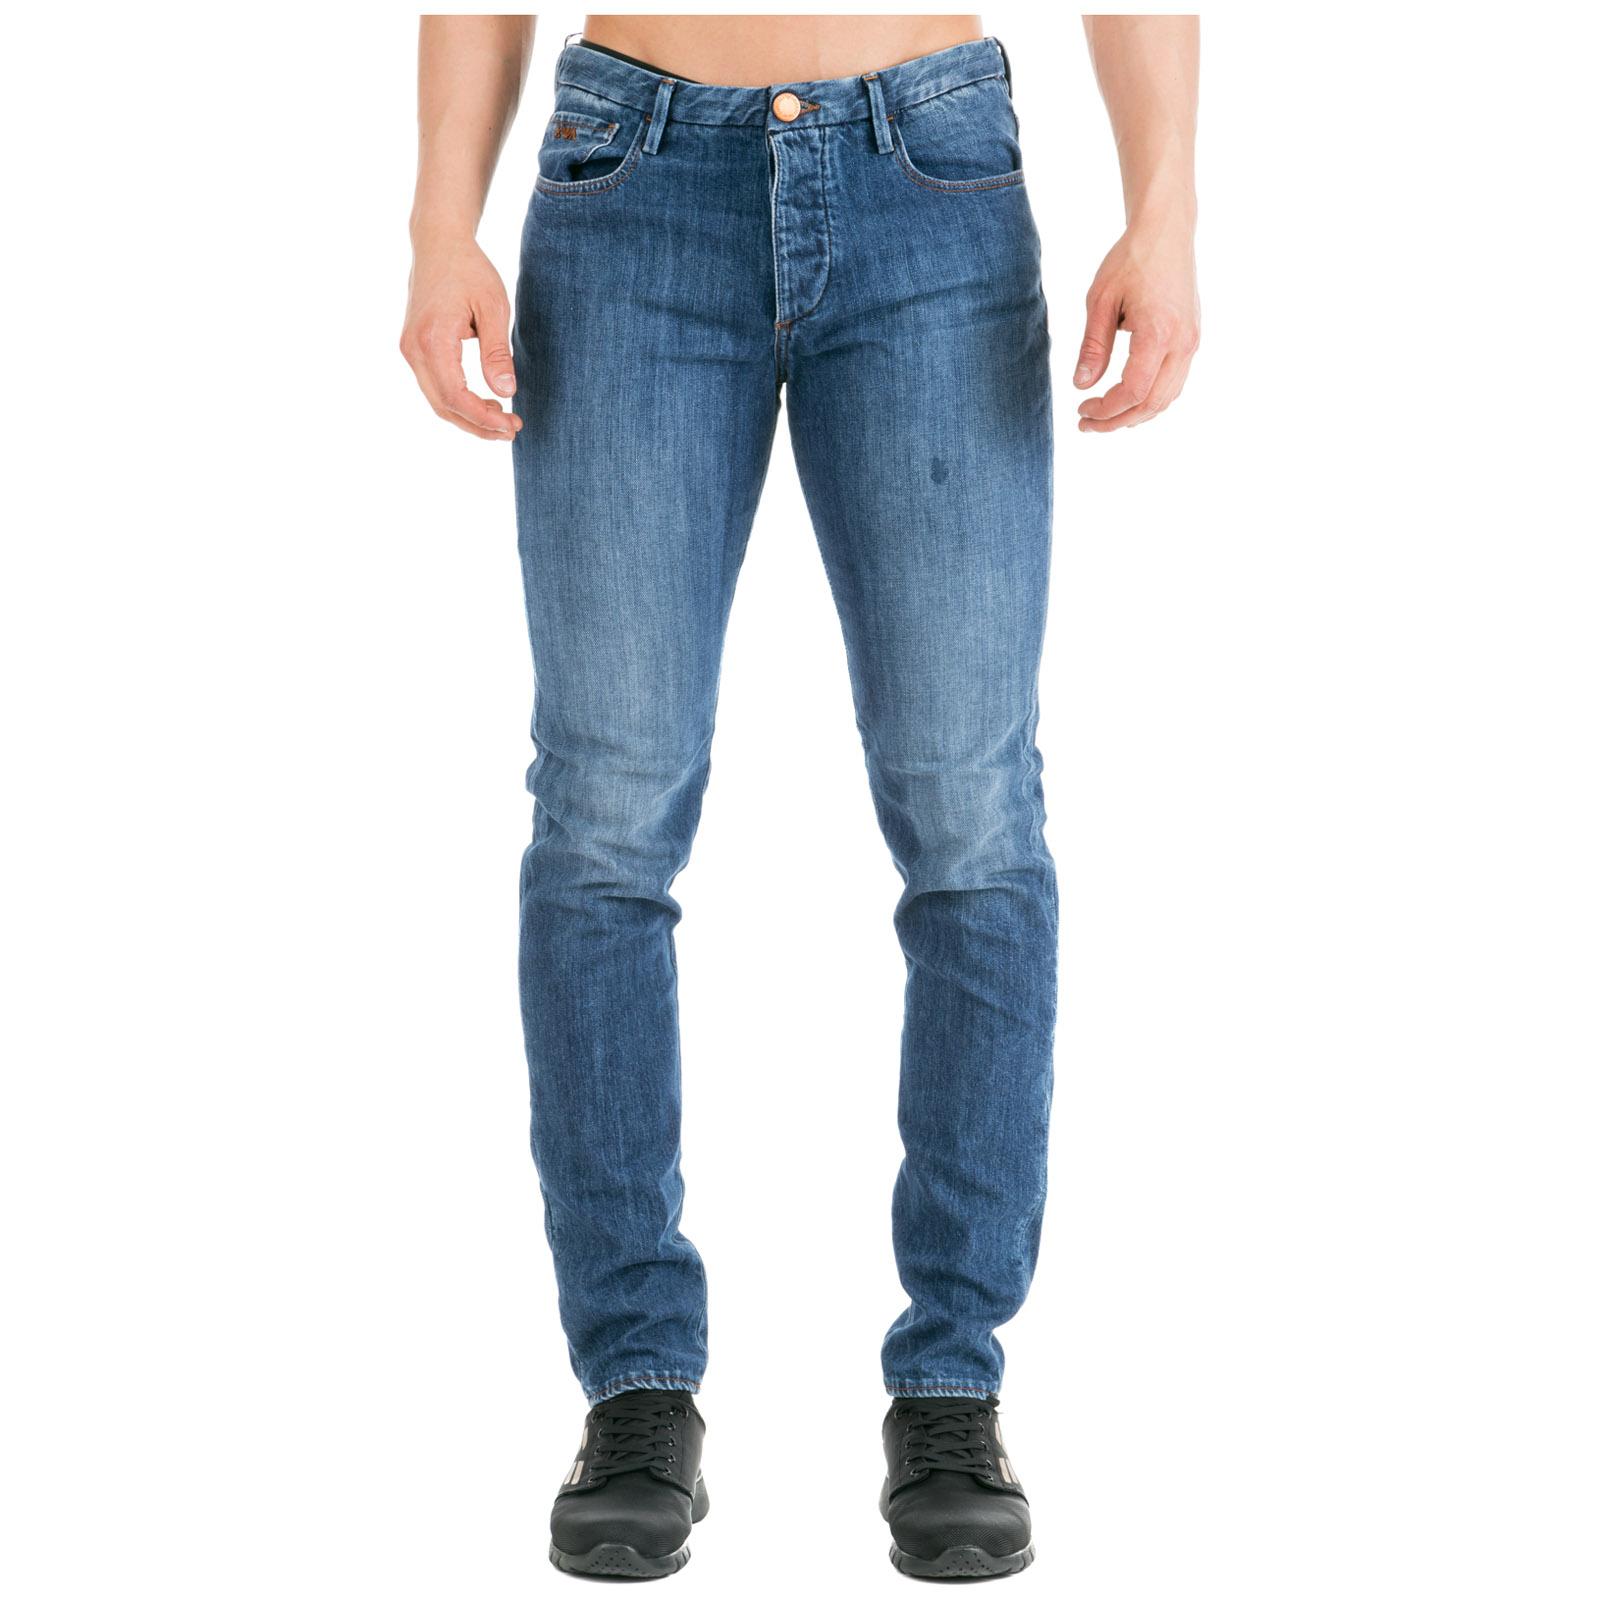 Emporio Armani Men's Jeans Denim Skinny Fit in Blue for Men - Lyst